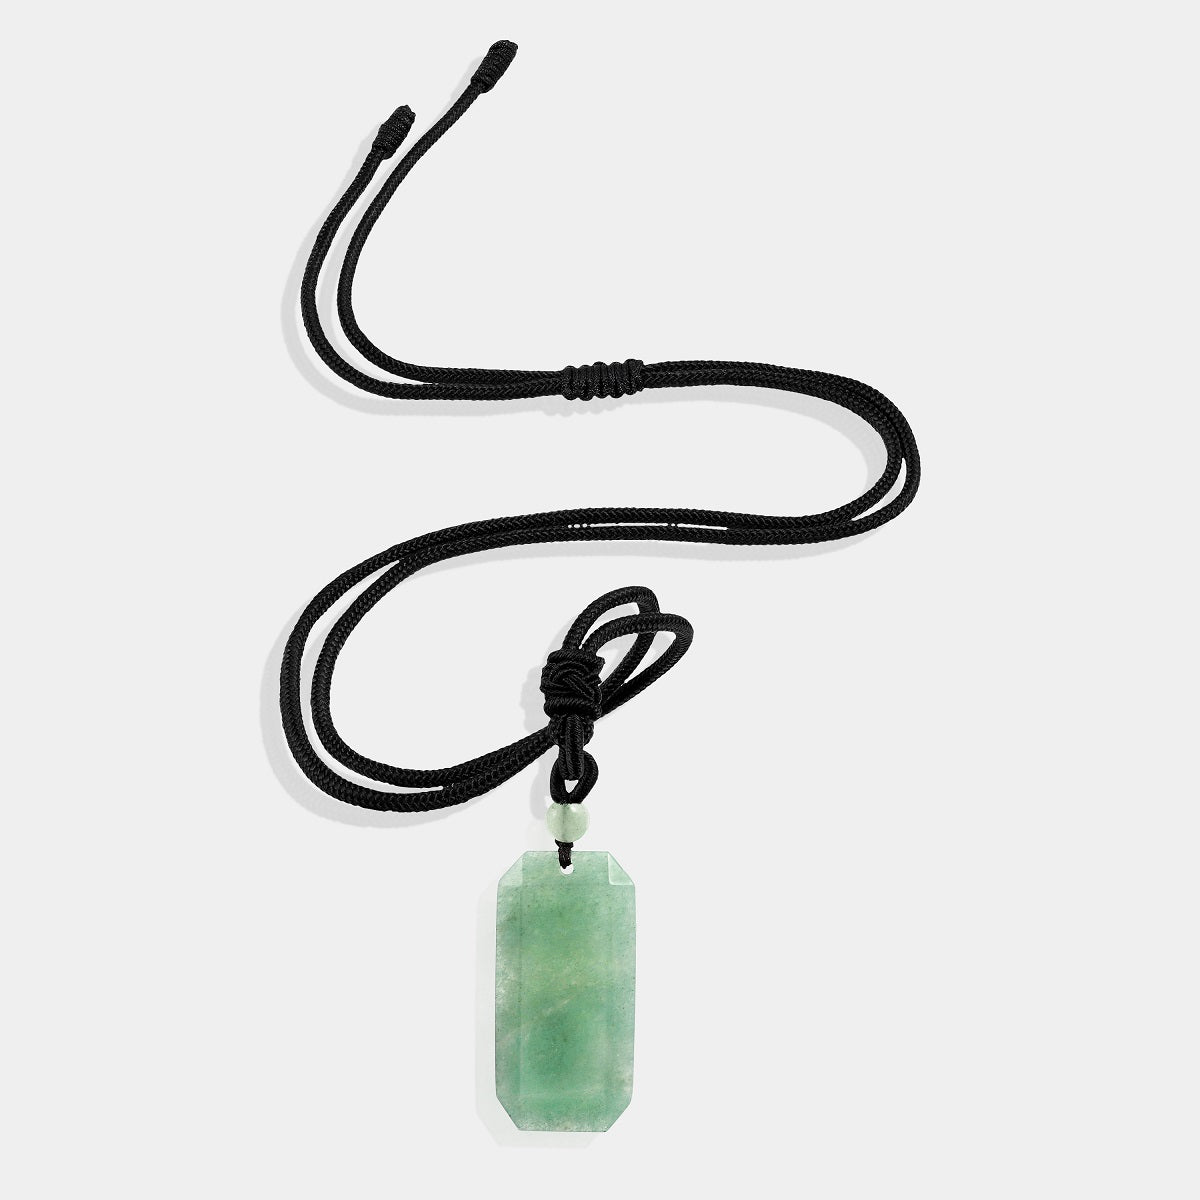 JADENOVA Full Wire Wrapped Energy Healing Crystal Gemstone Pendant Necklace  18